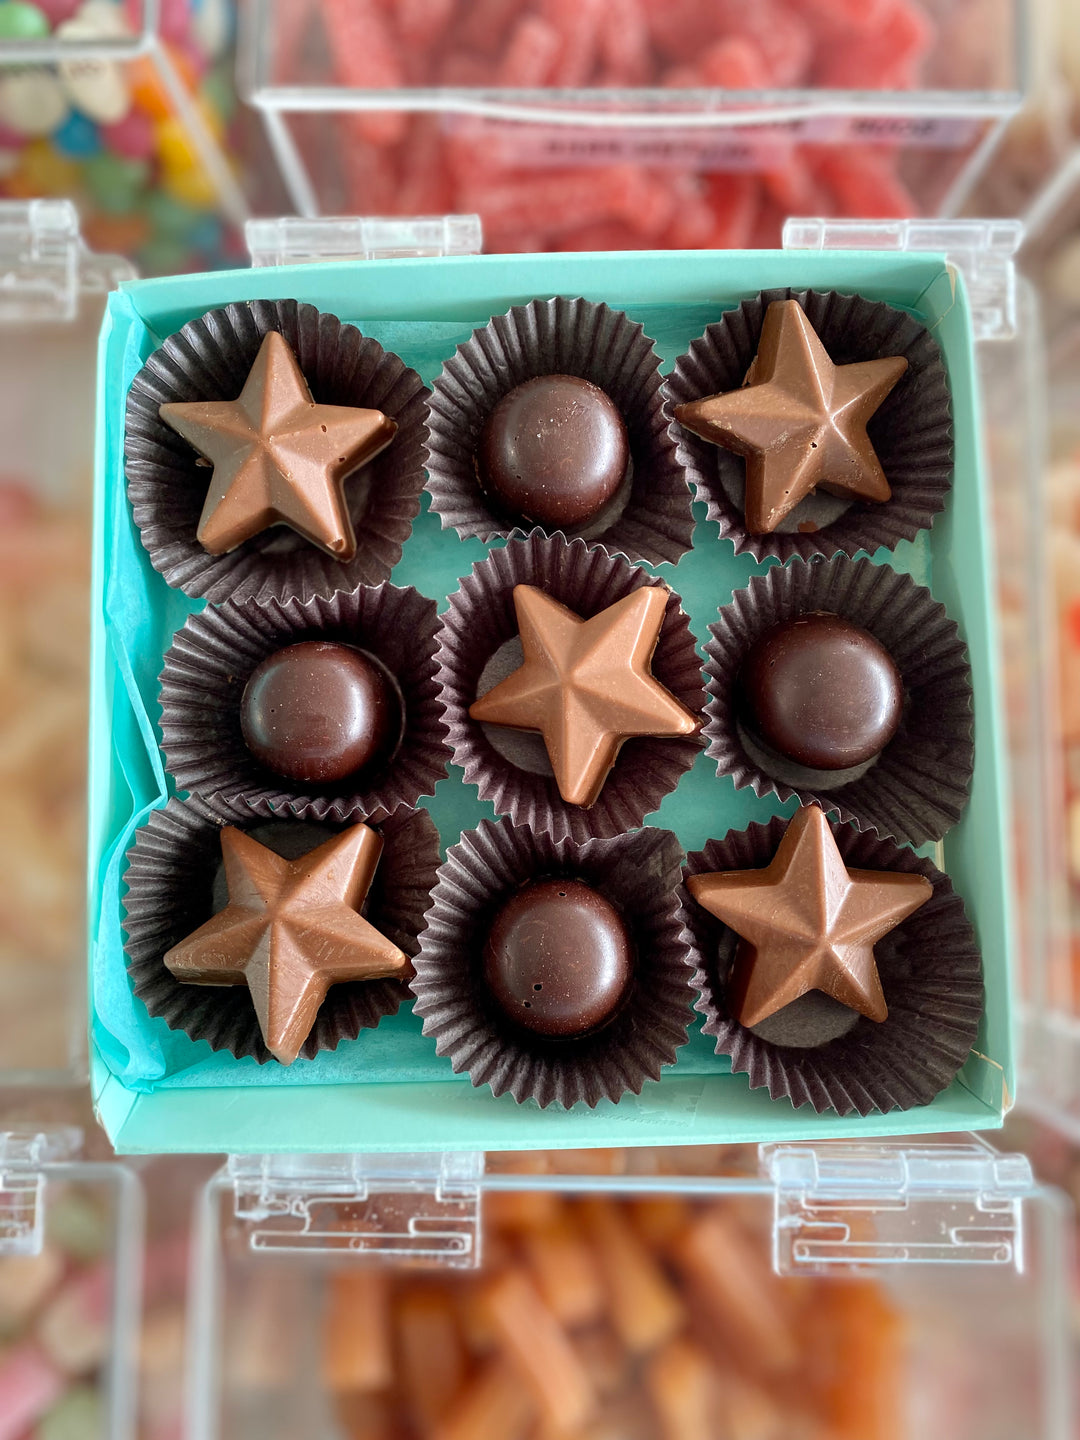 Nantasket Chocolate Gift Box